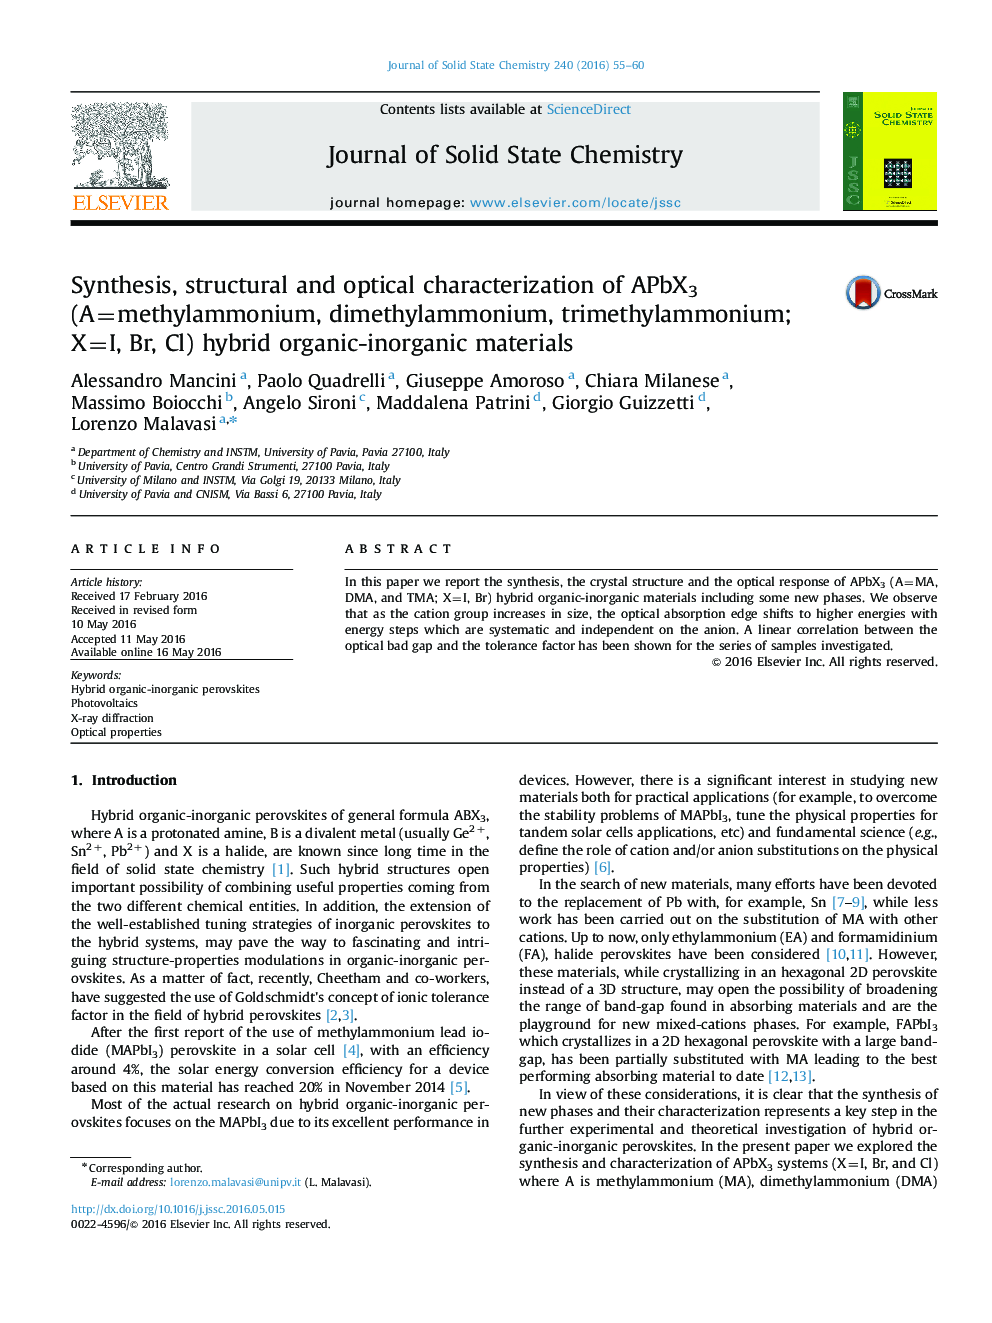 Synthesis, structural and optical characterization of APbX3 (A=methylammonium, dimethylammonium, trimethylammonium; X=I, Br, Cl) hybrid organic-inorganic materials